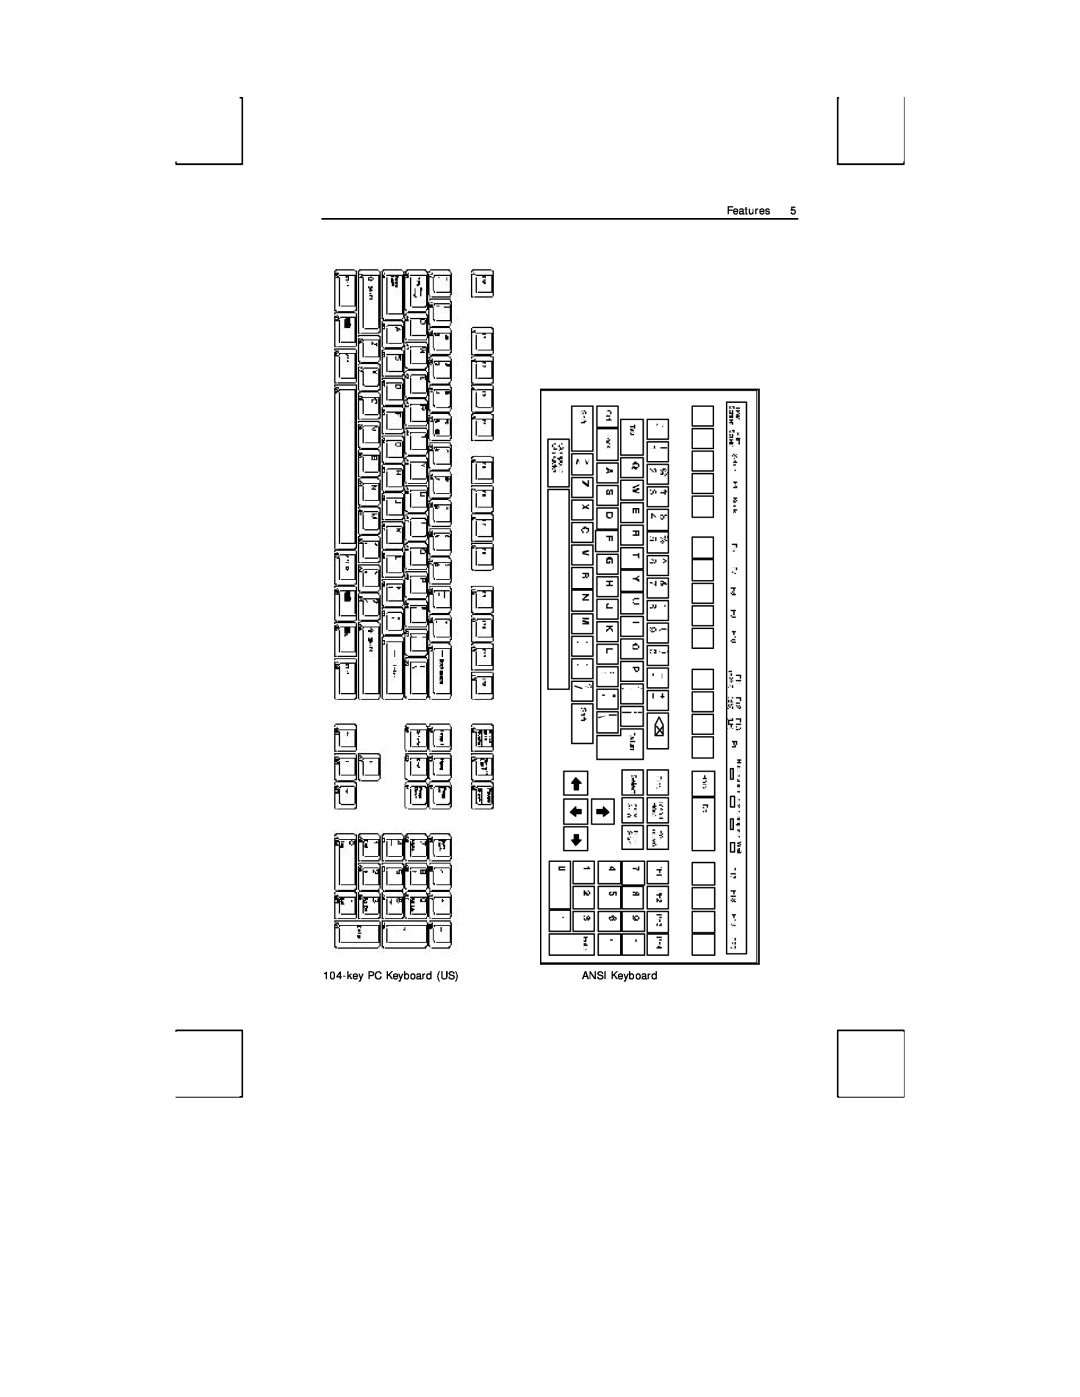 Boundless Technologies ADDS 3153 ASCII manual Features, keyPC Keyboard US, ANSI Keyboard 